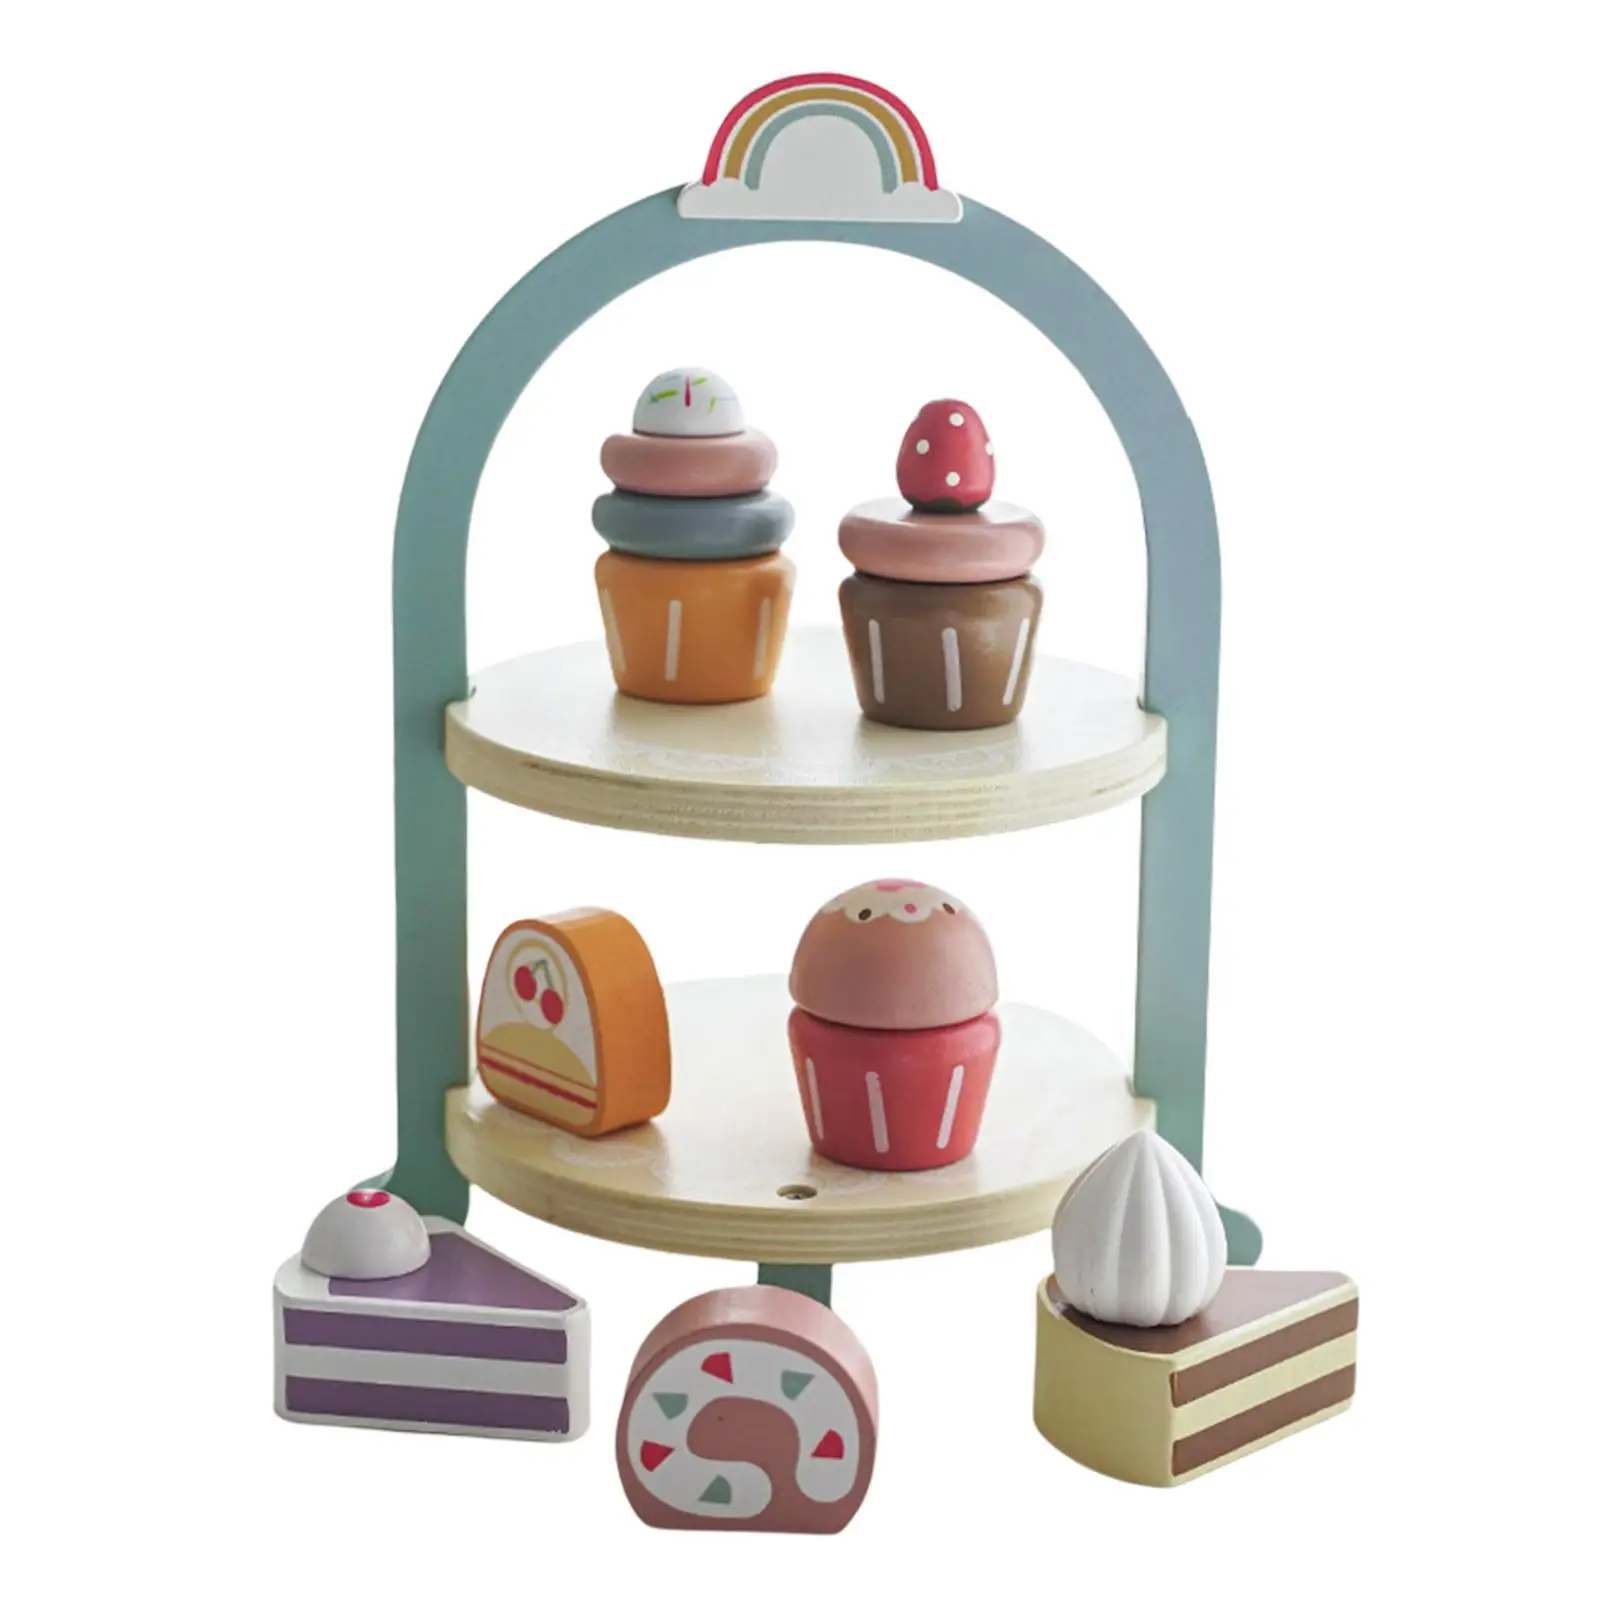 Wooden Dessert Set Cupcake Set Colorful Cookies for Children Developmental Toy